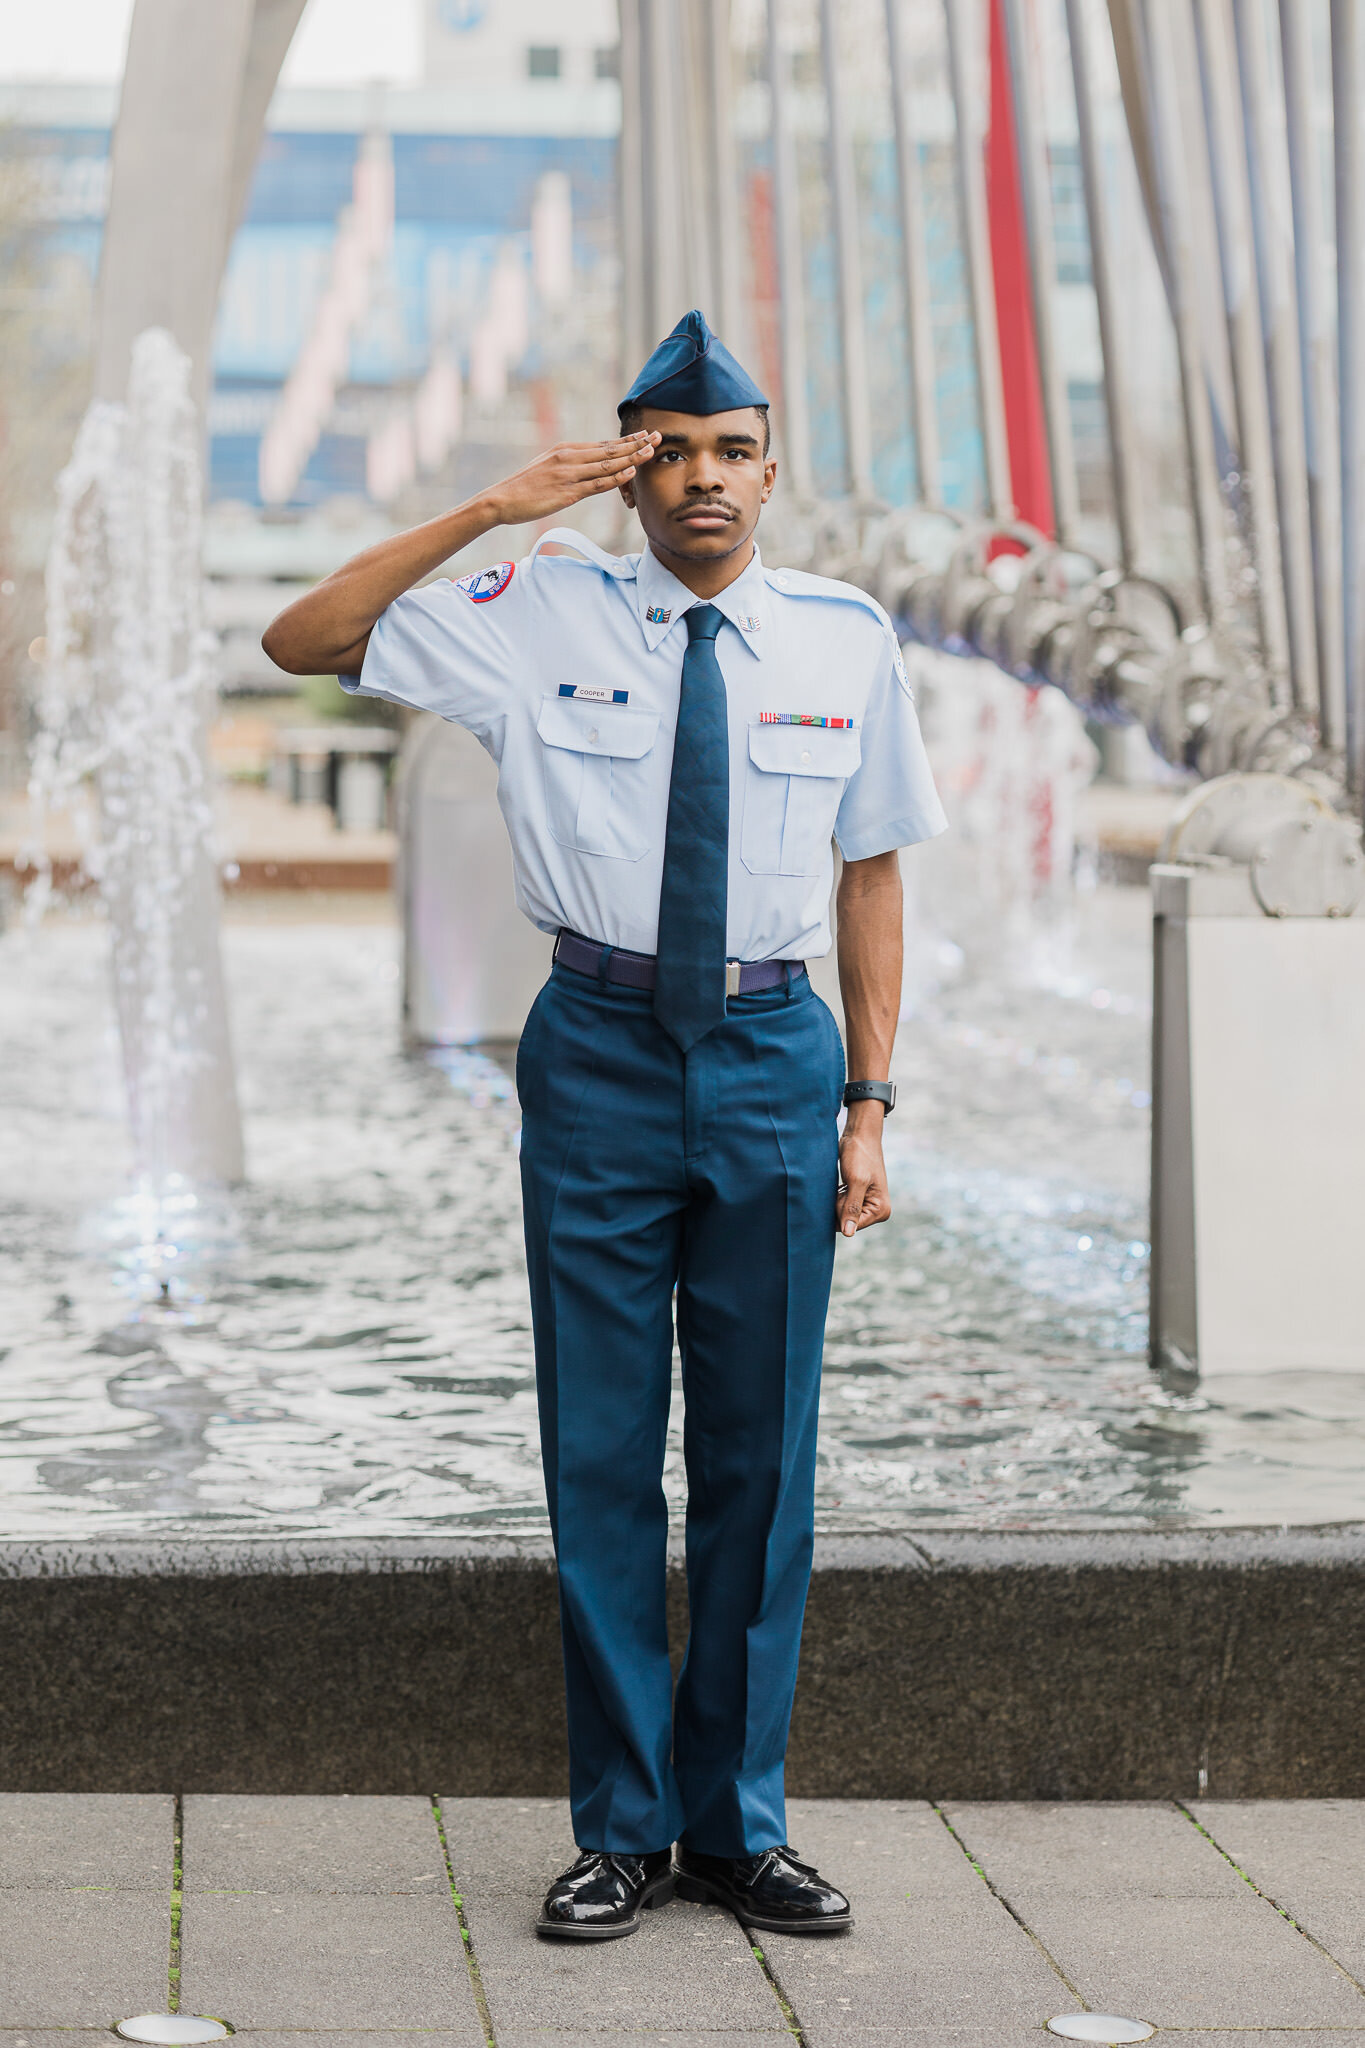 xavier senior jrotc uniform saluting